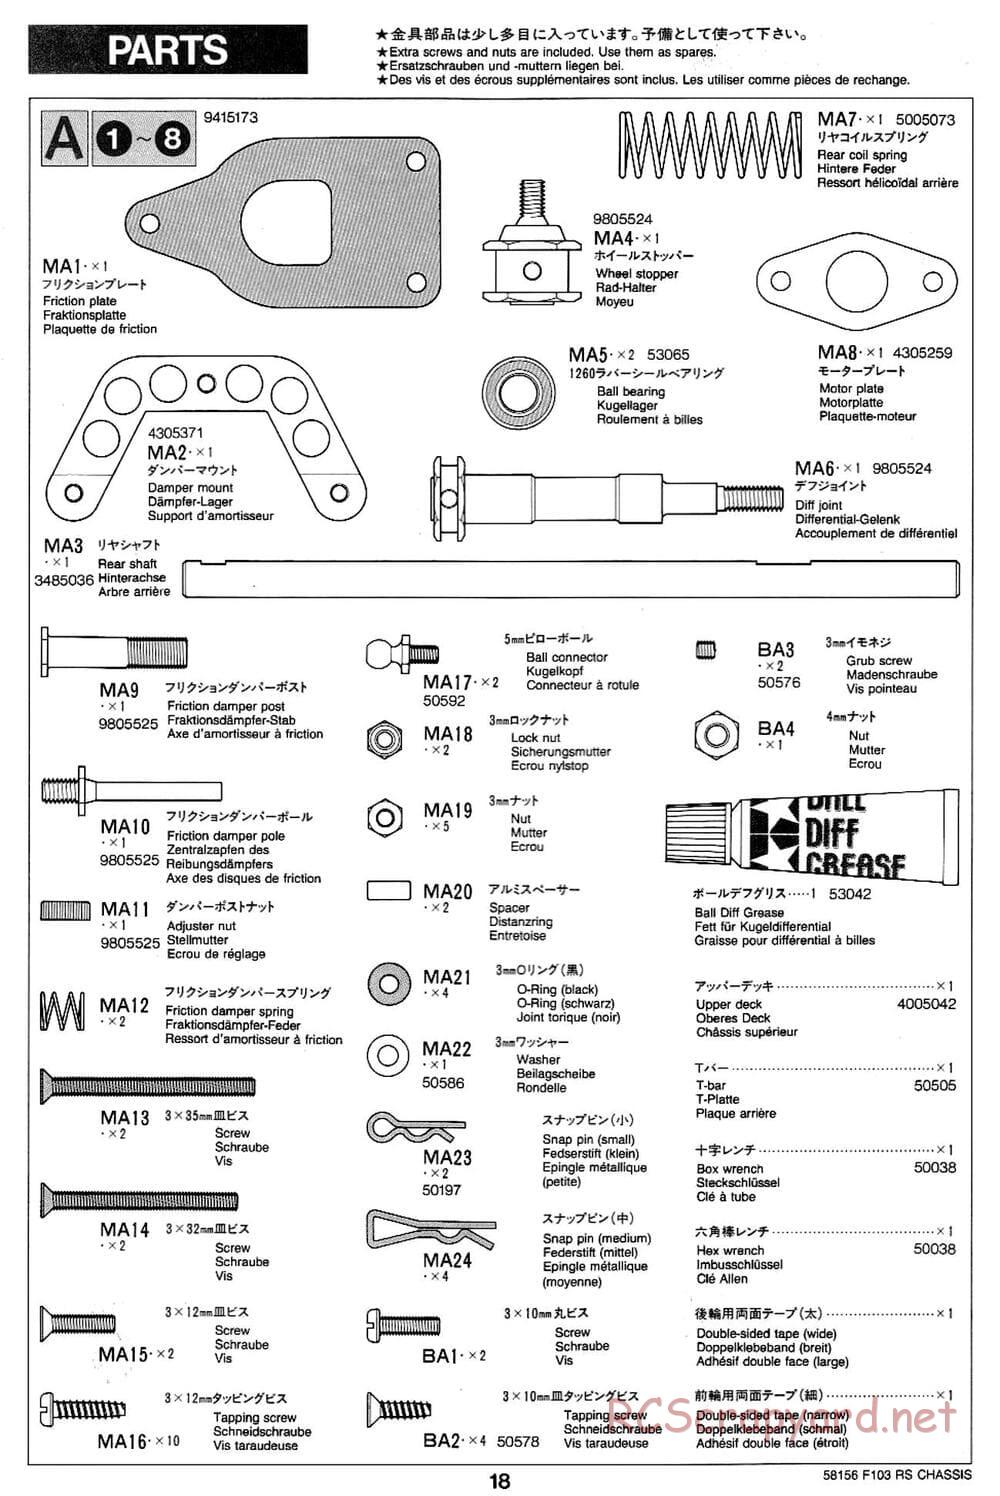 Tamiya - F103RS Chassis - Manual - Page 18